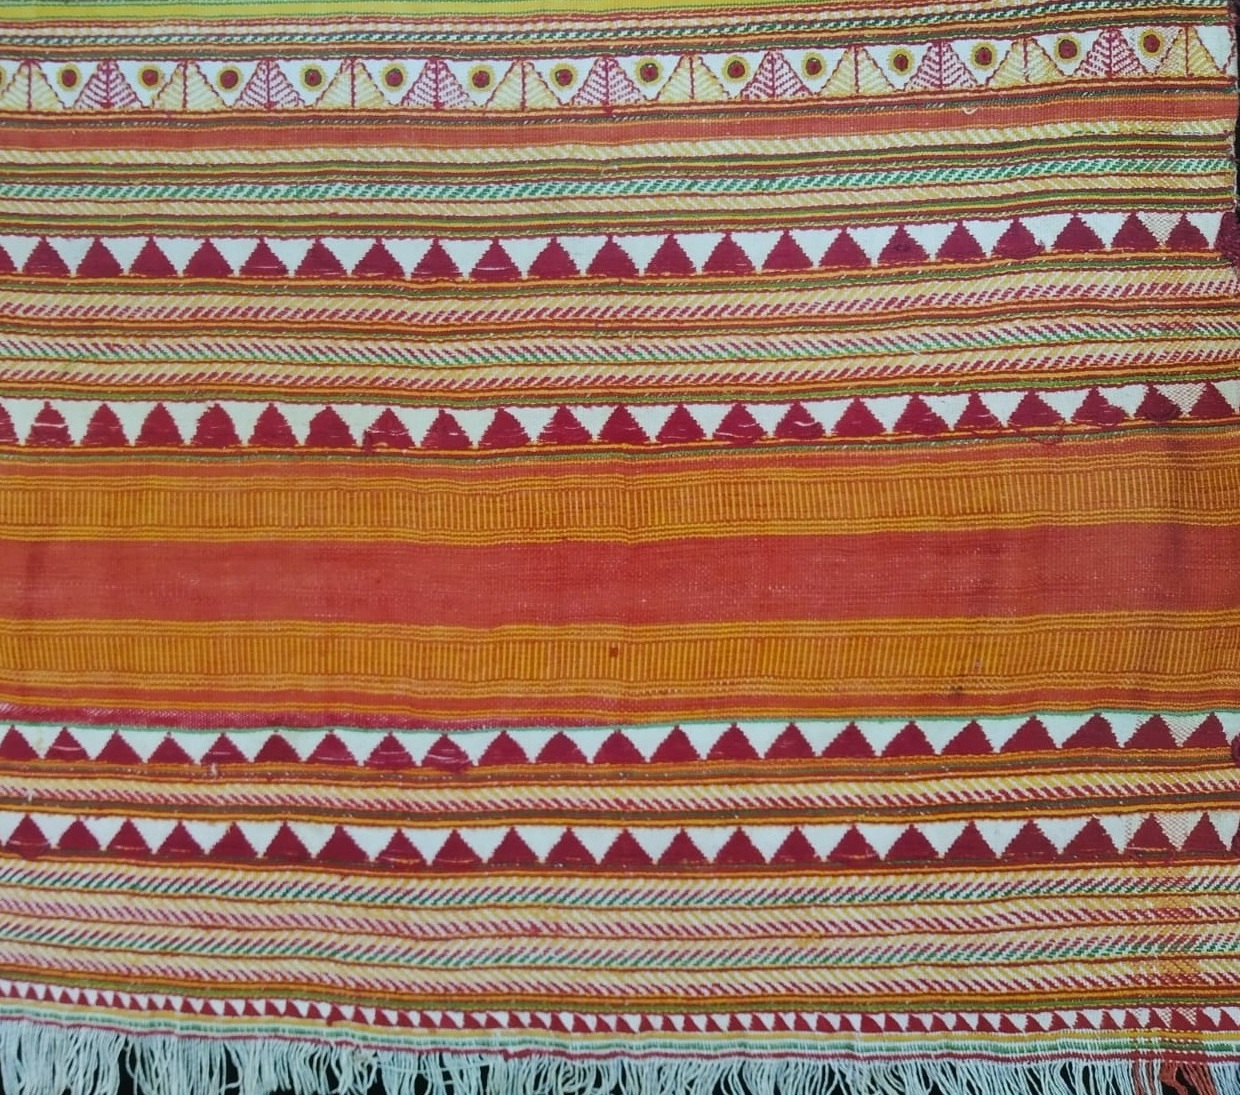 Dongaria Kondh Textile of Odisha